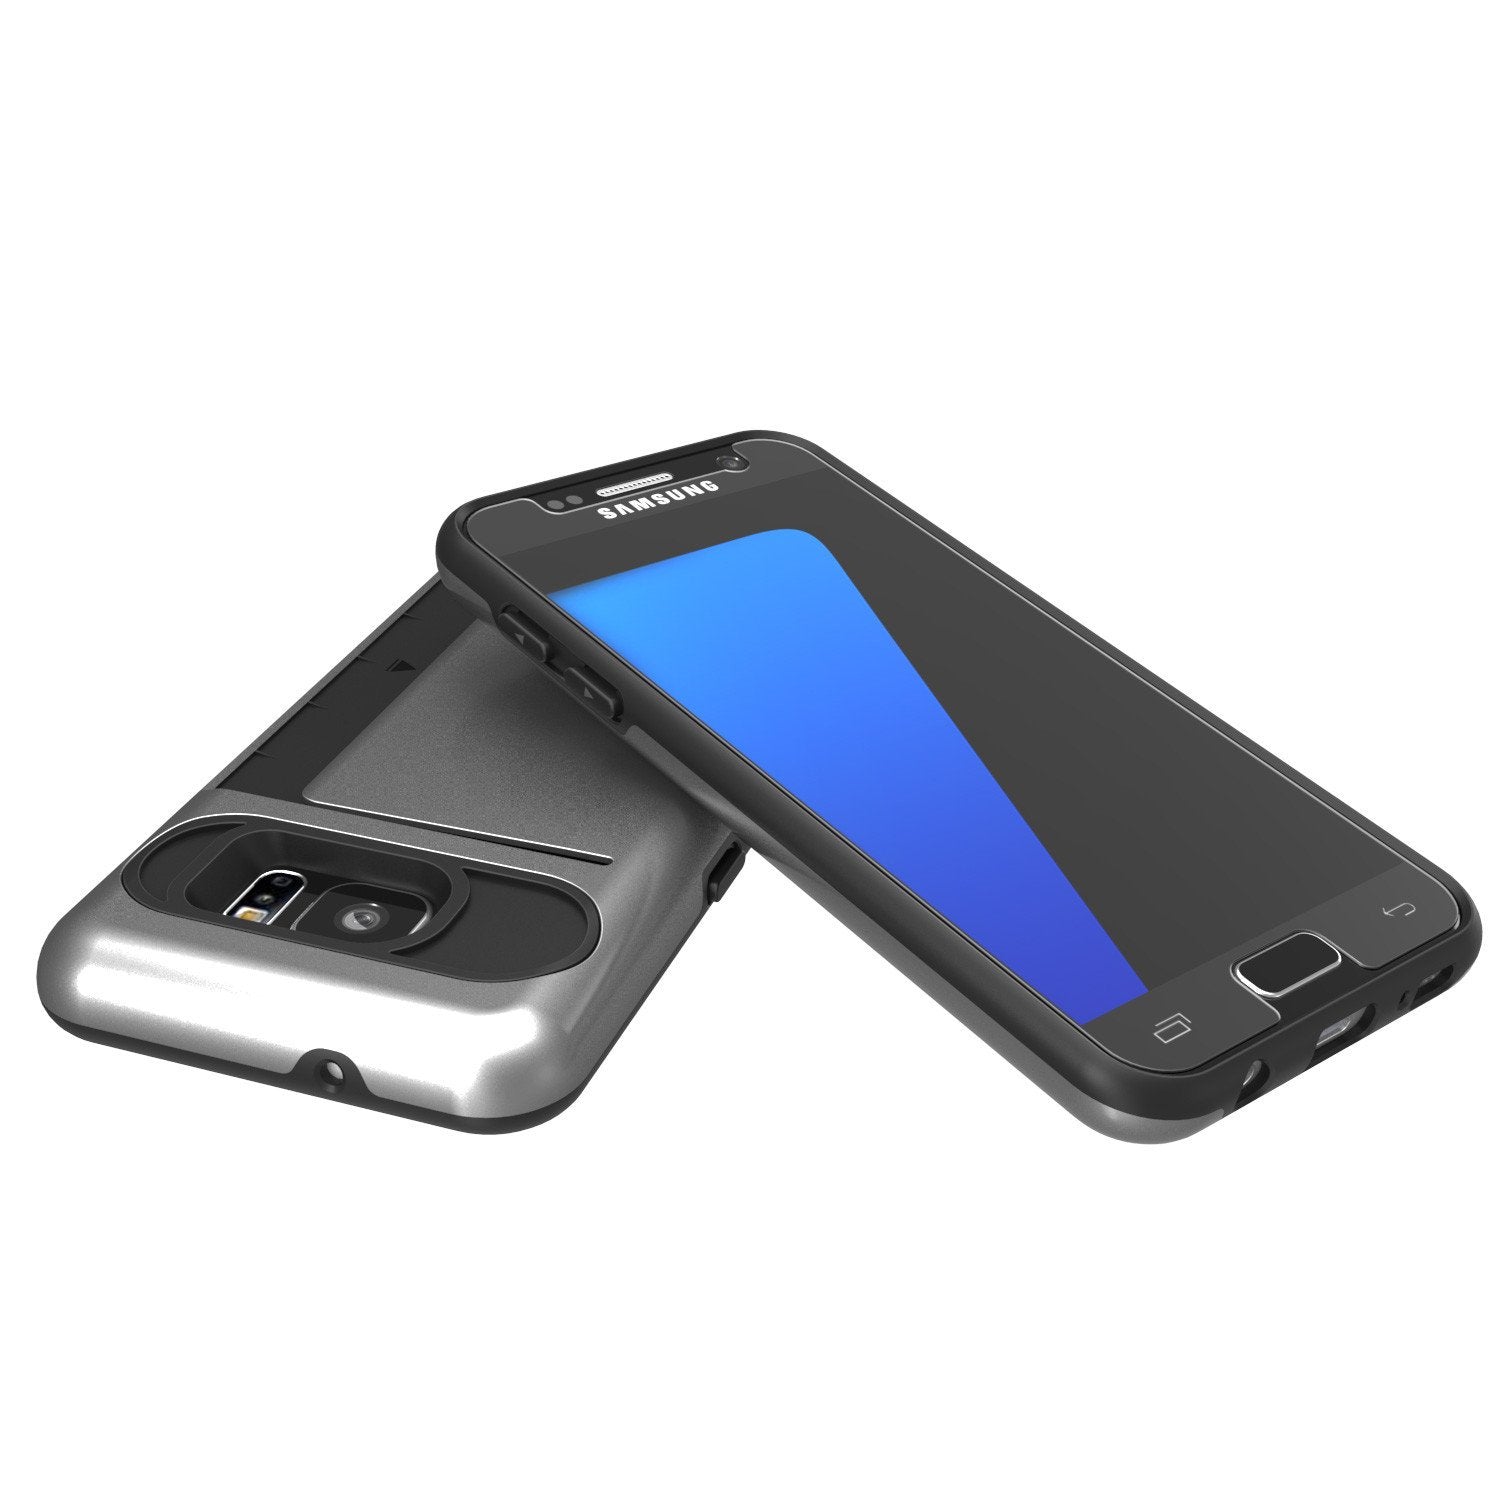 Galaxy S7 EDGE Case PunkCase CLUTCH Grey Series Slim Armor Soft Cover Case w/ Screen Protector